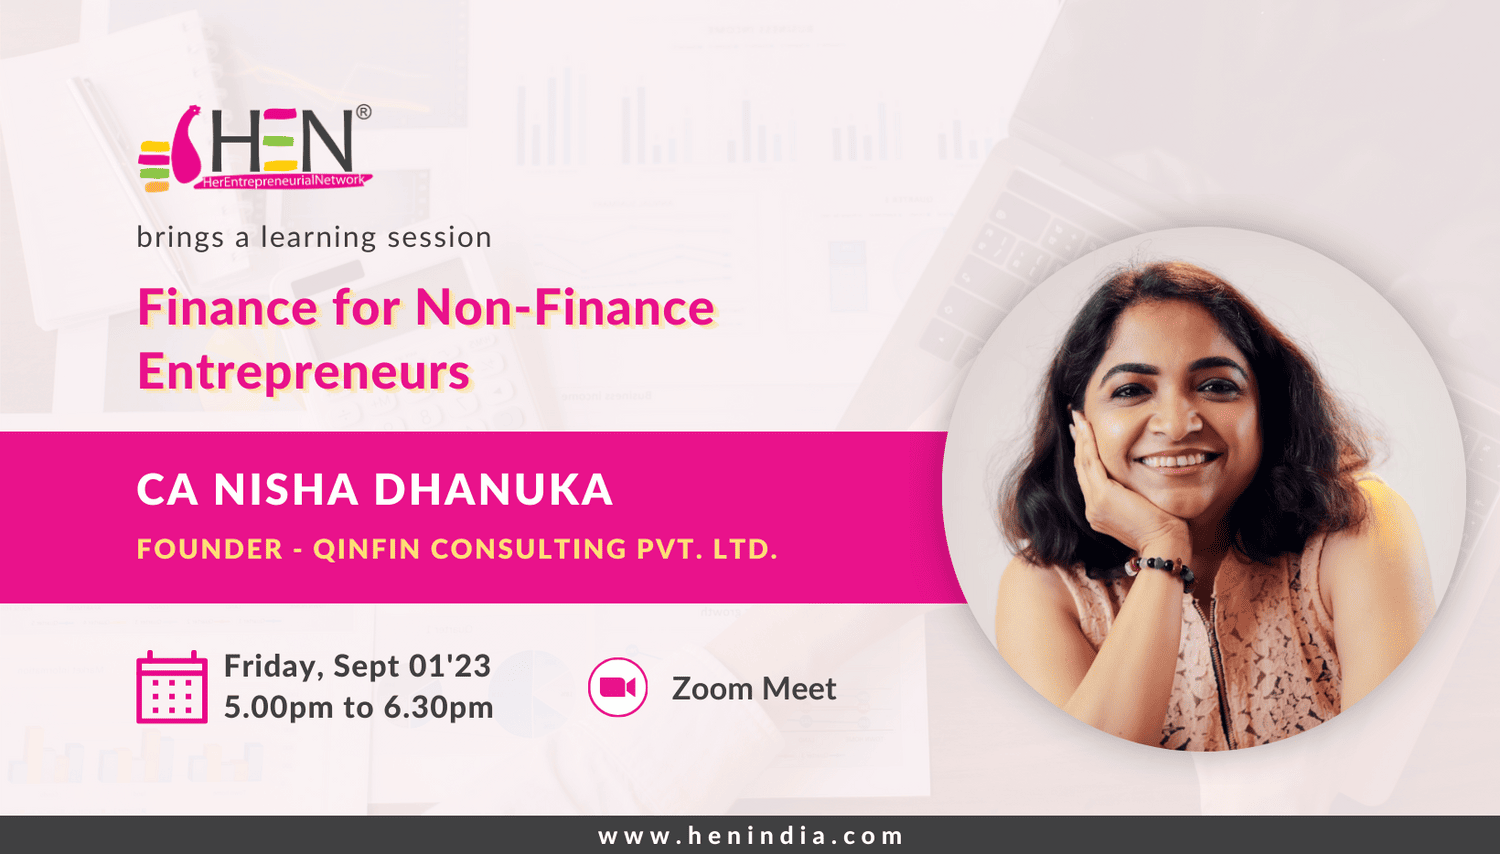 Finance for Non-Finance Entrepreneurs by CA Nisha Dhanuka